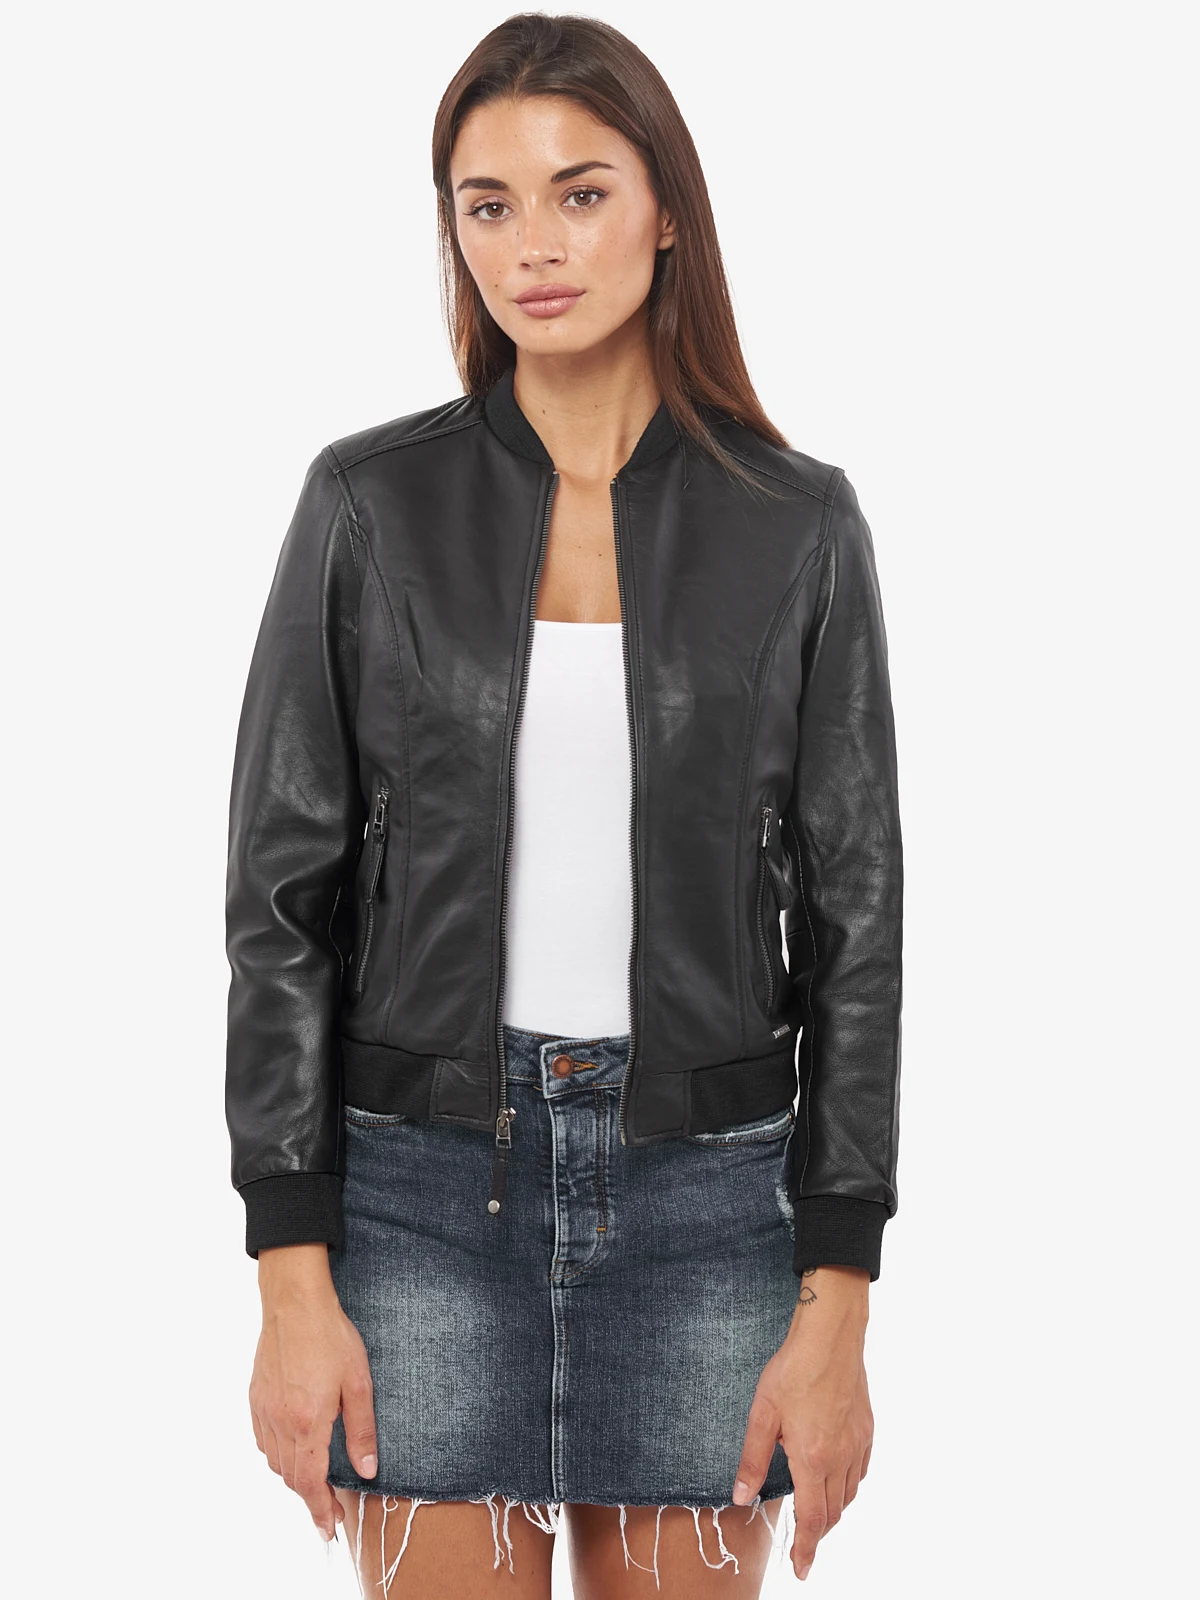 VAINAS European Brand  Women Genuine Buffalo leather jacket for women Real leather  Motorcycle jackets Biker jackets Niovi